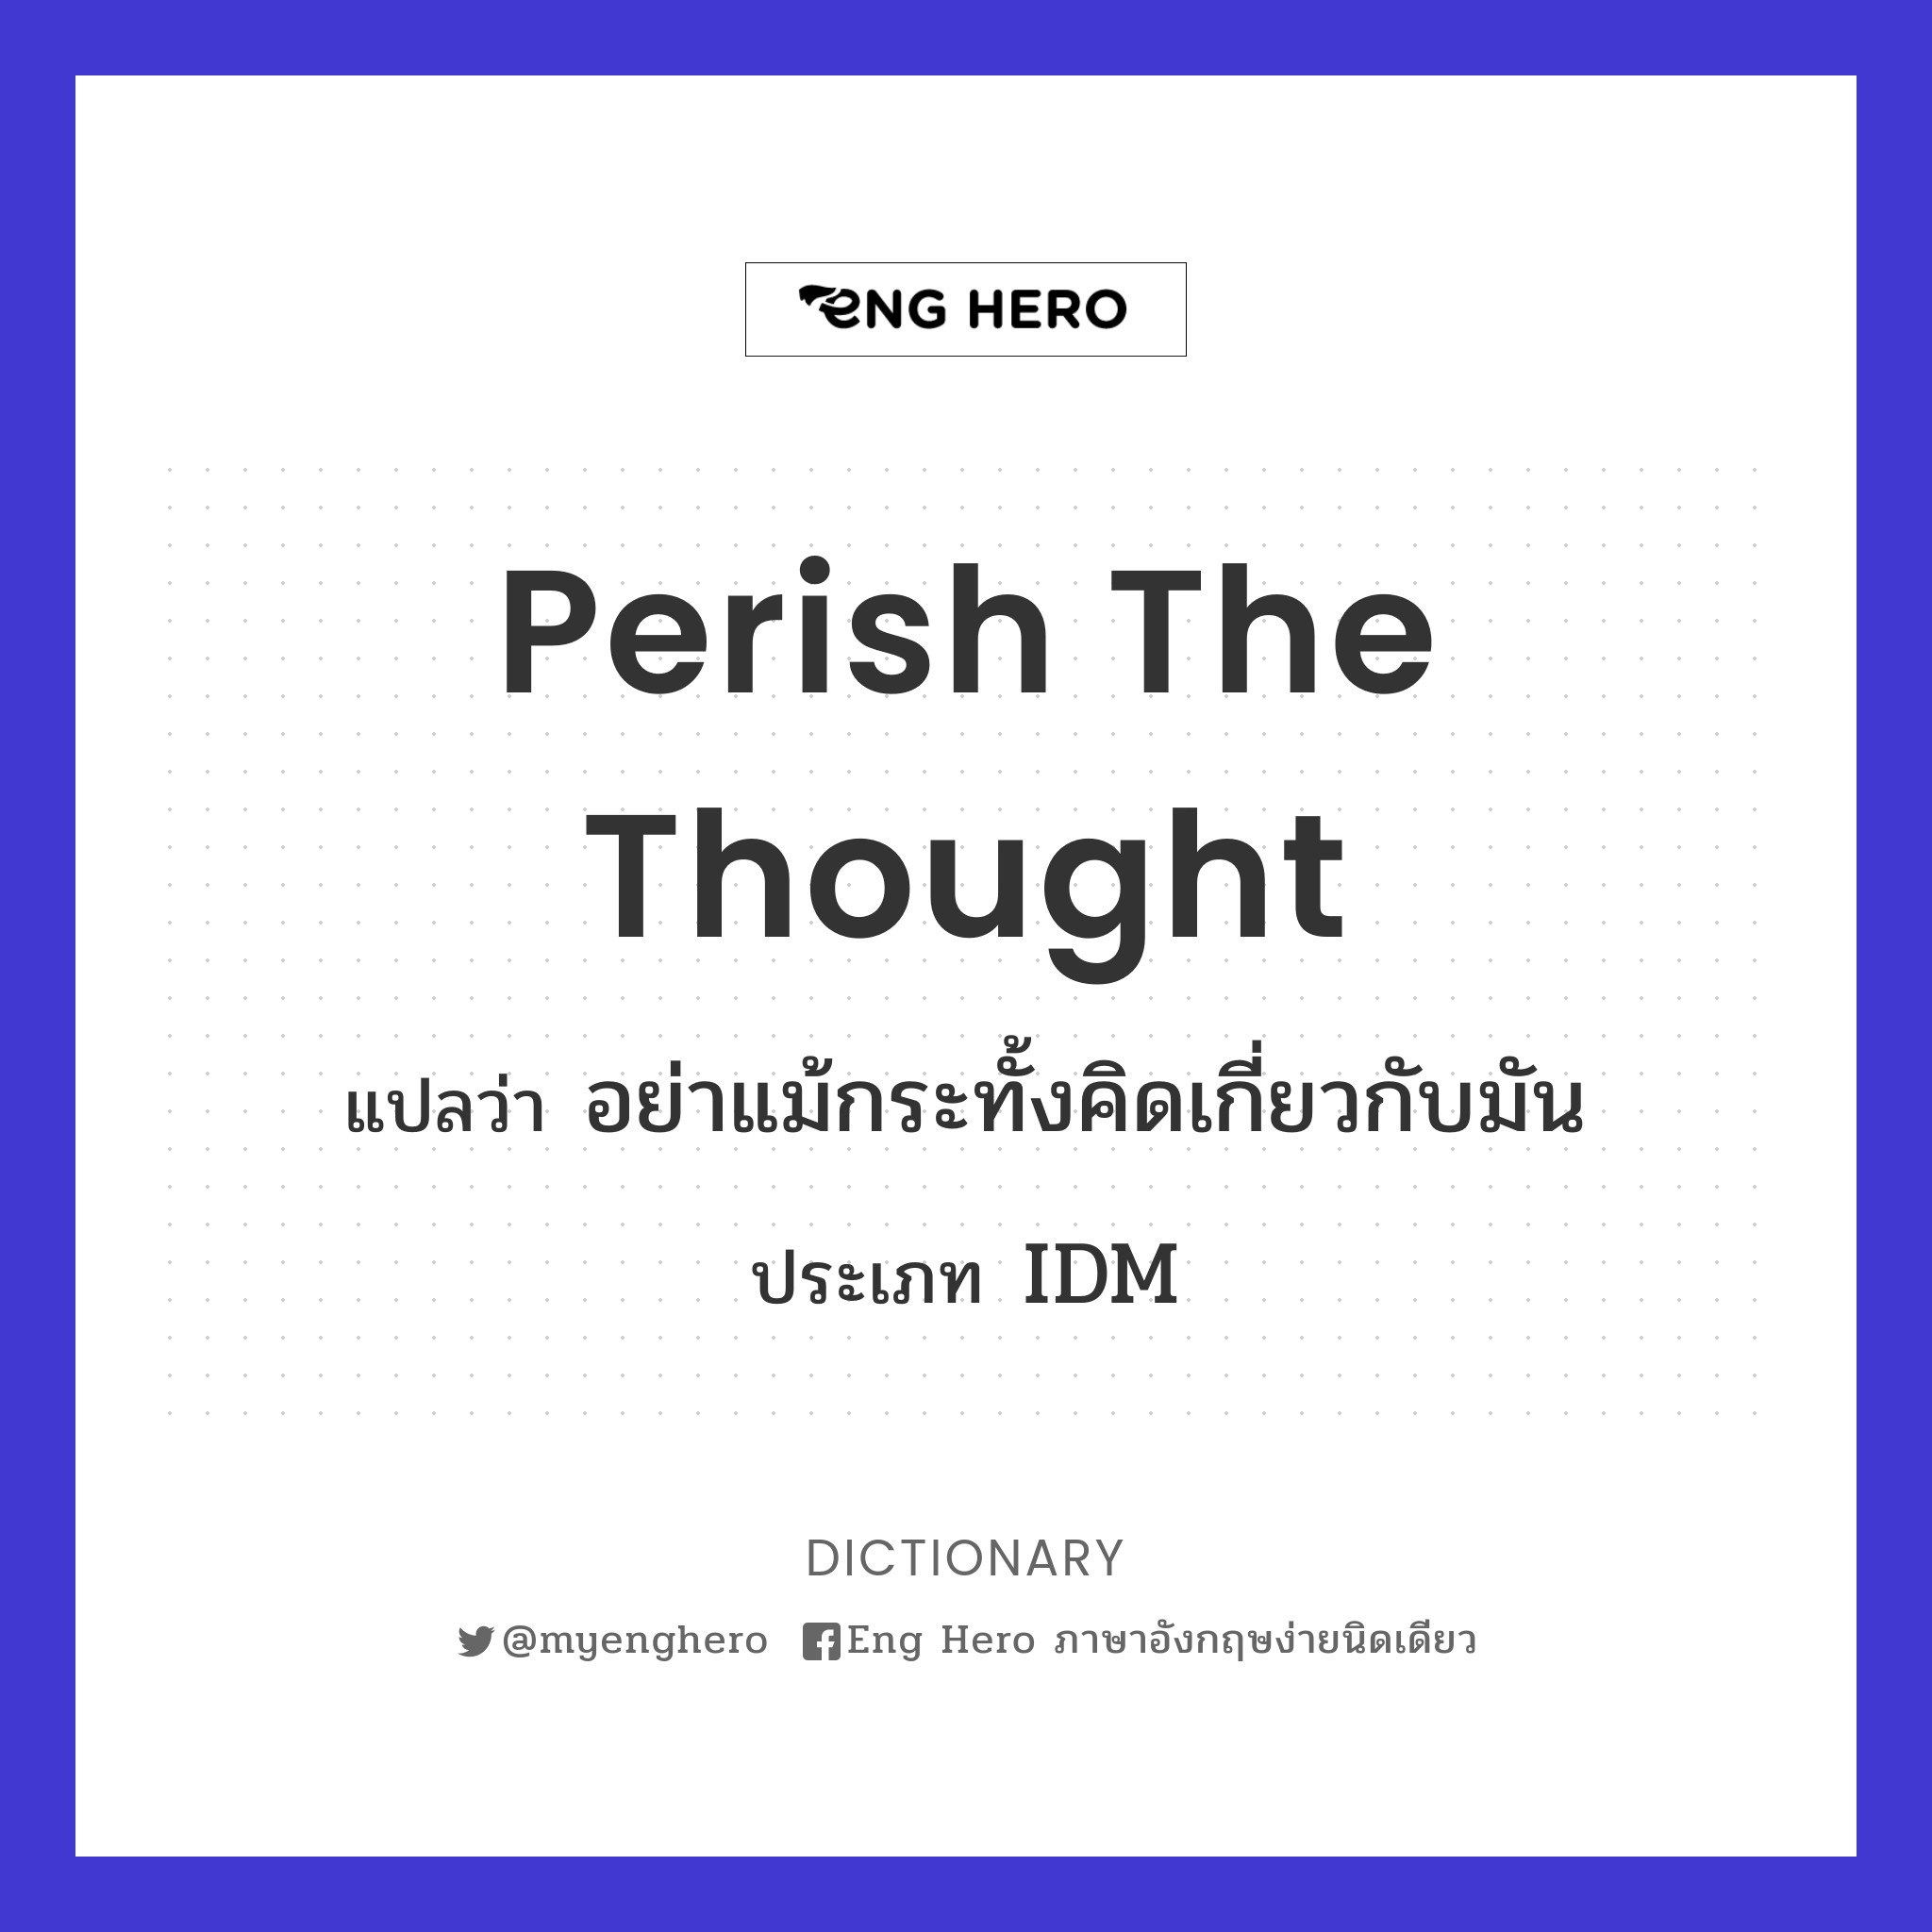 Perish the thought